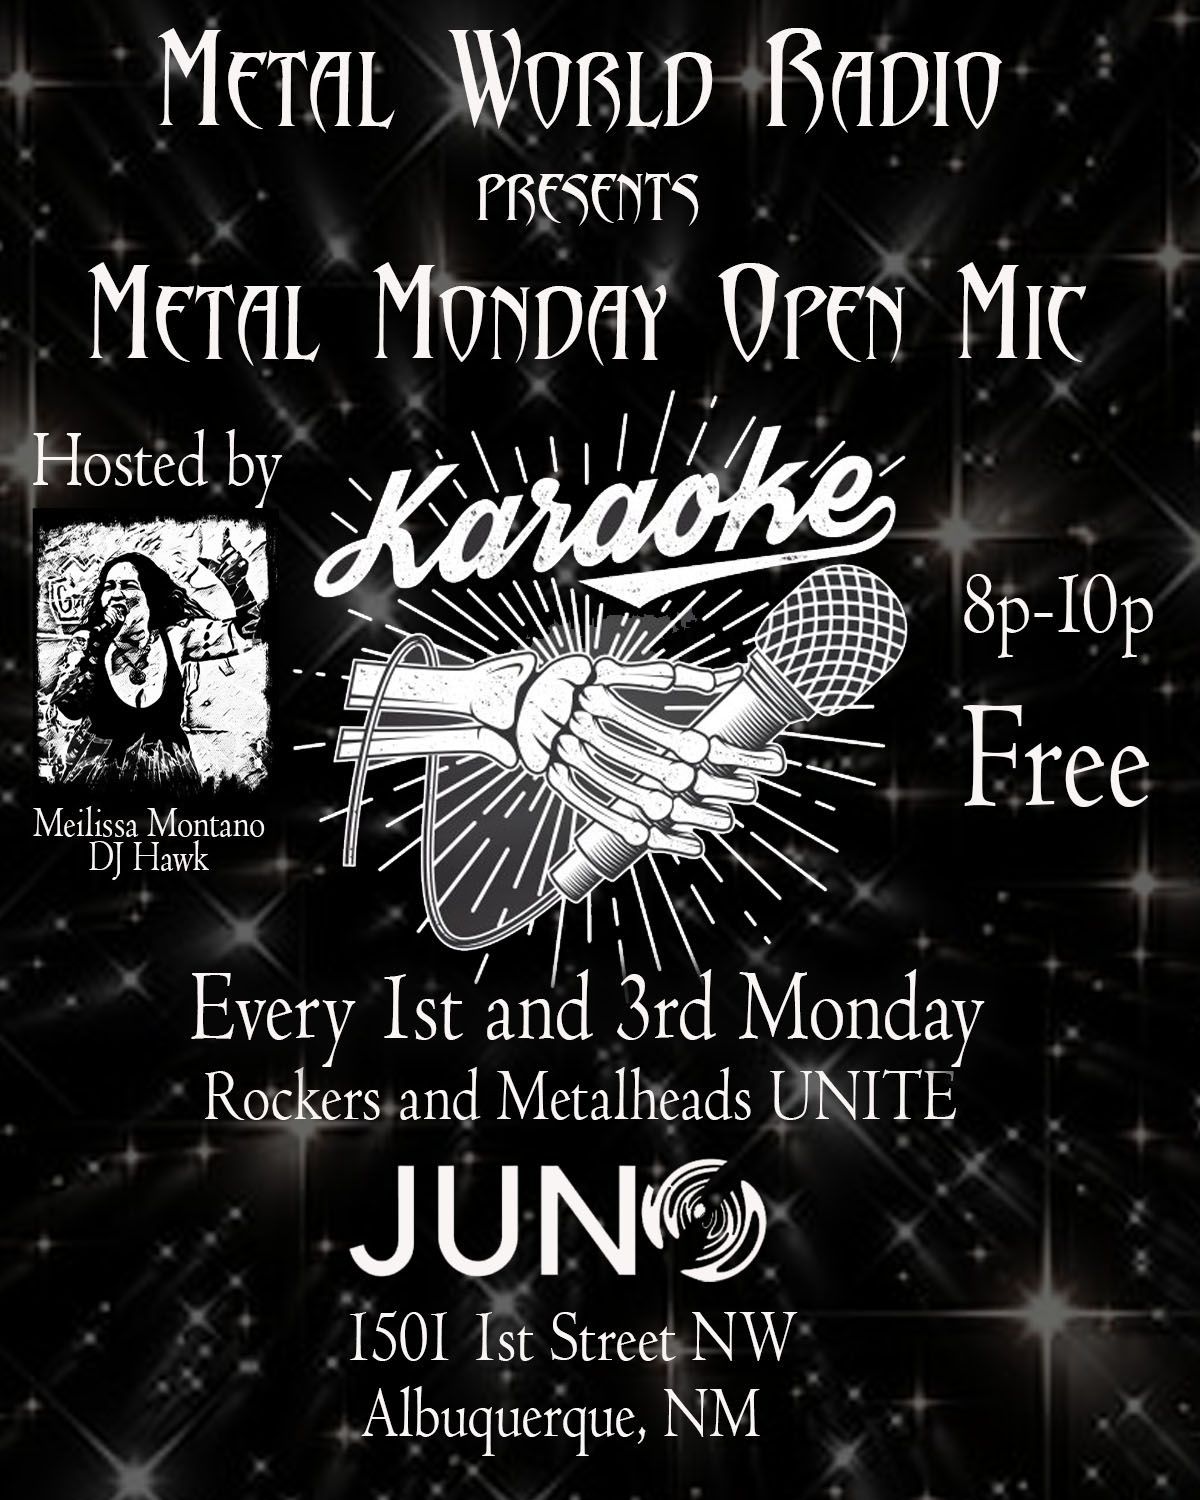 Metal World Radio Presents: Metal Monday Open Mic and Karaoke